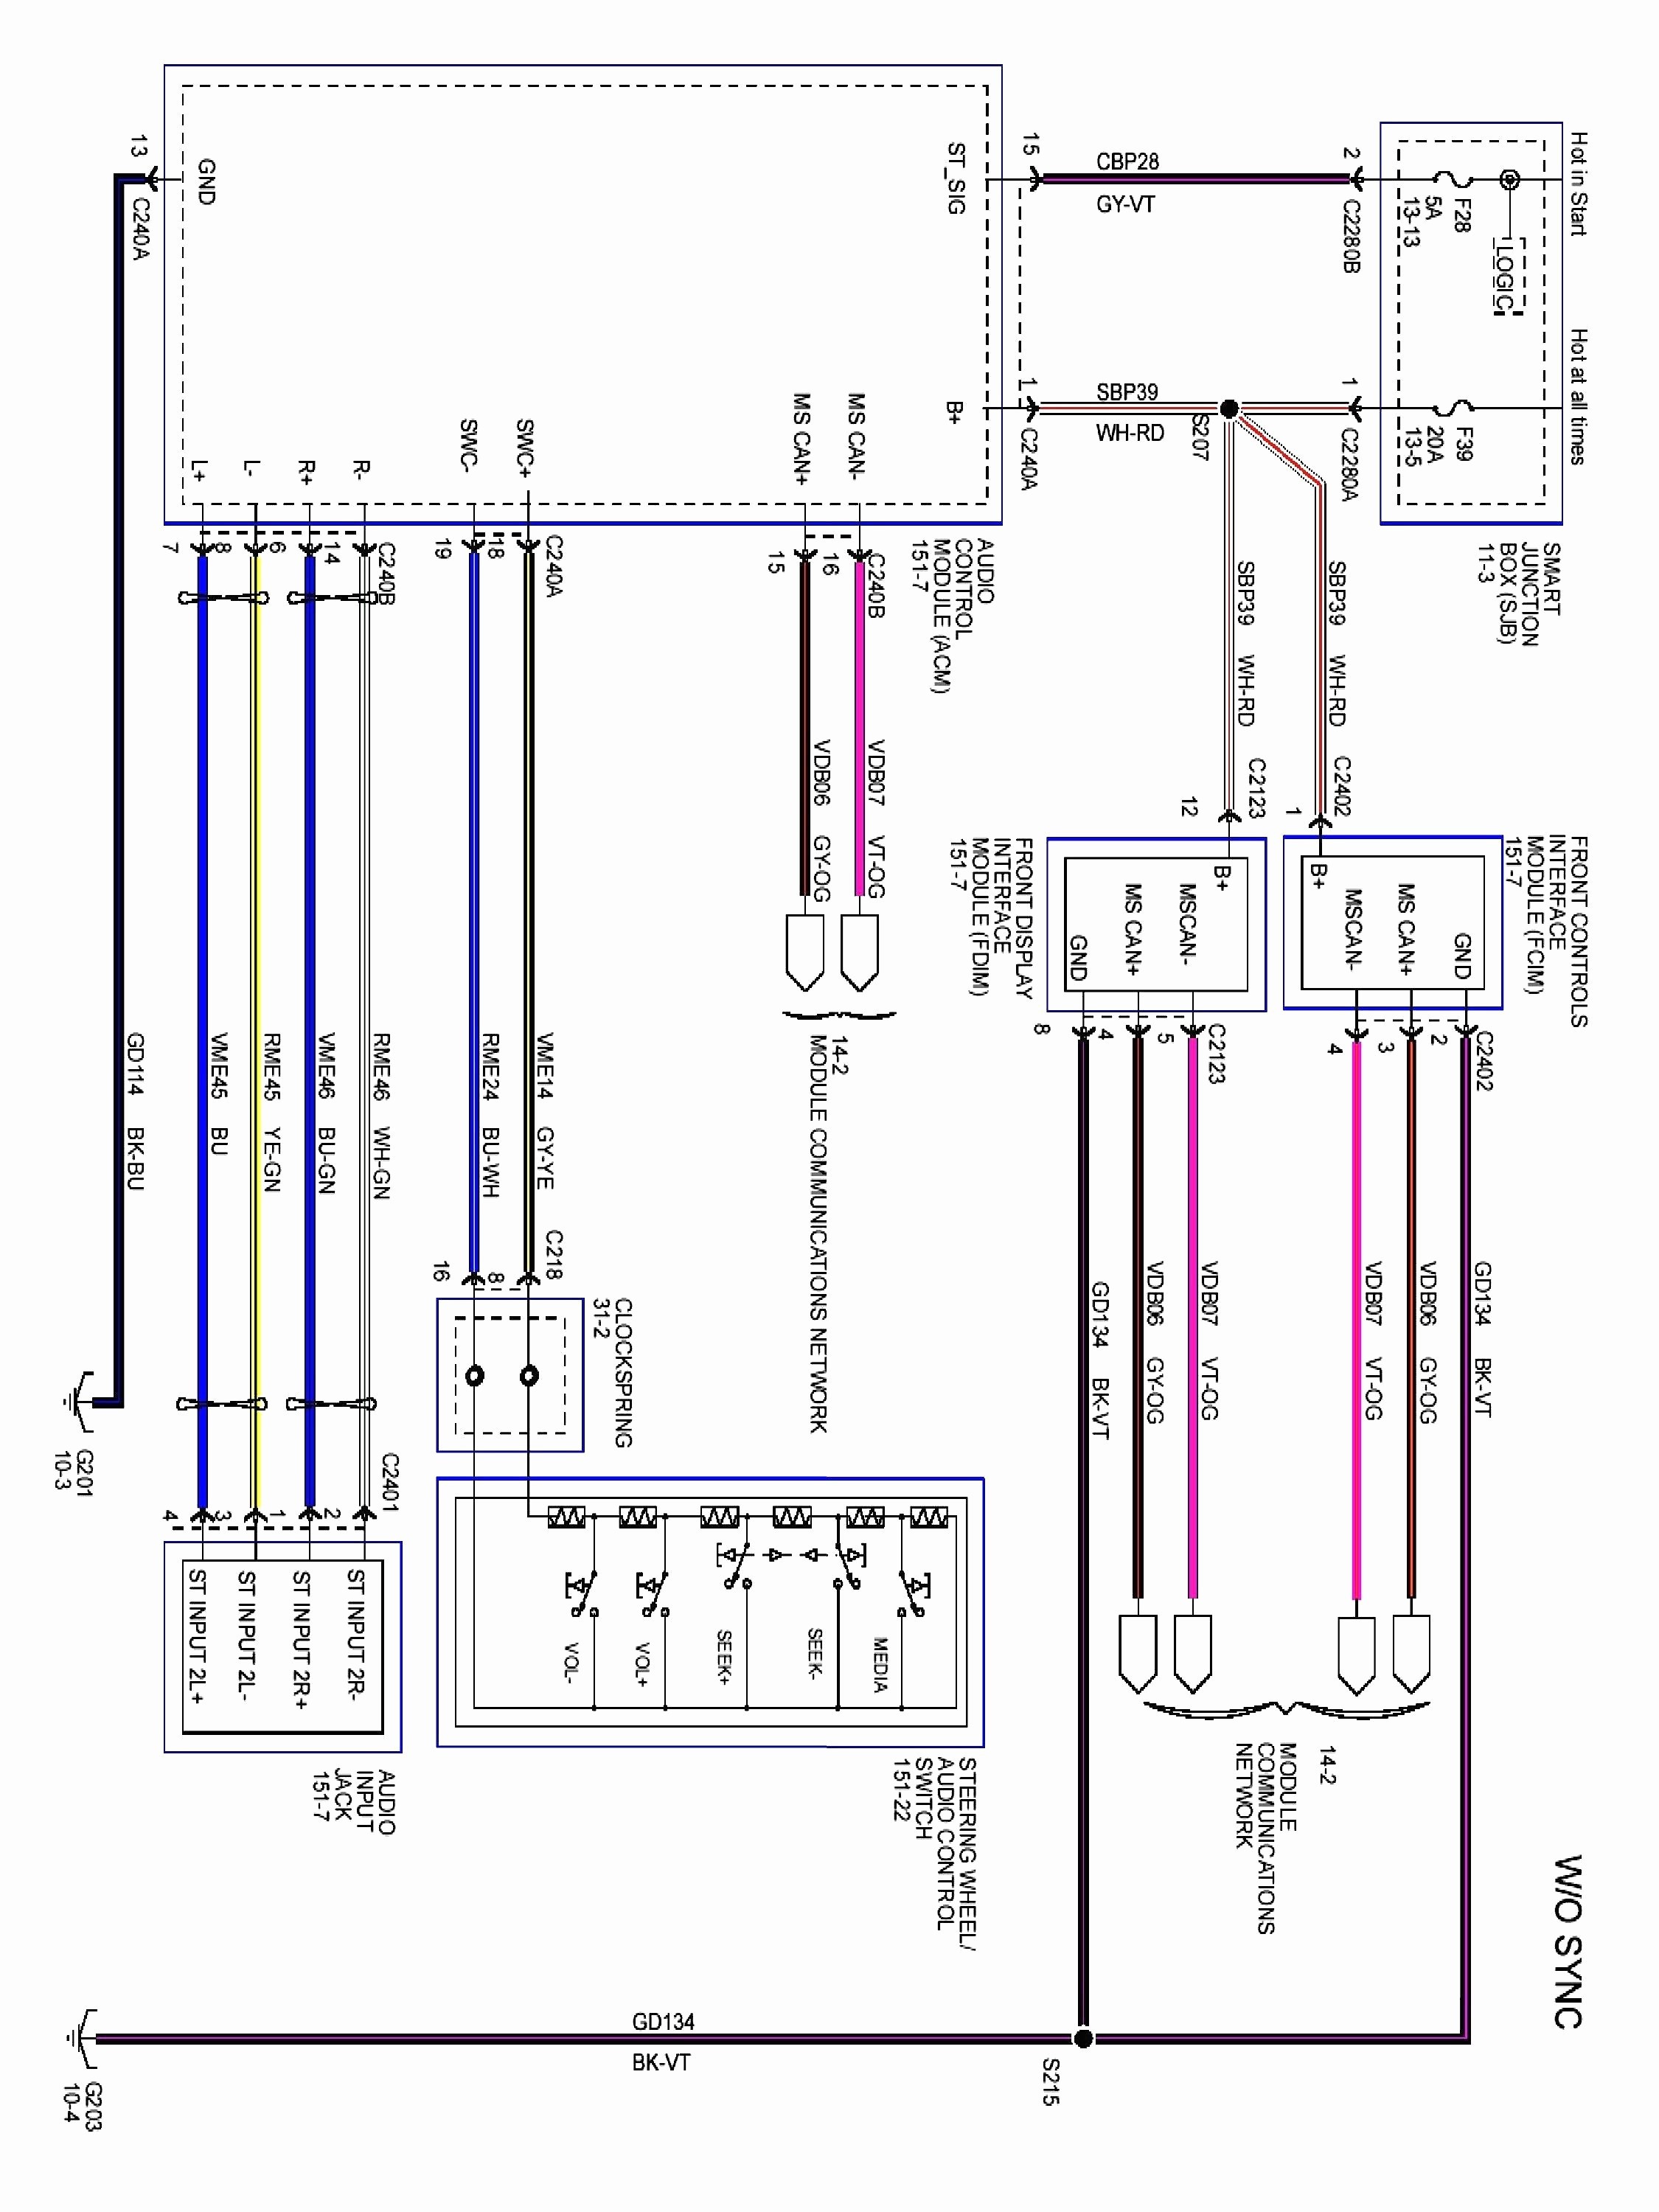 car stereo wiring diagram Download Wiring Diagram For Amplifier Car Stereo Best Amplifier Wiring Diagram